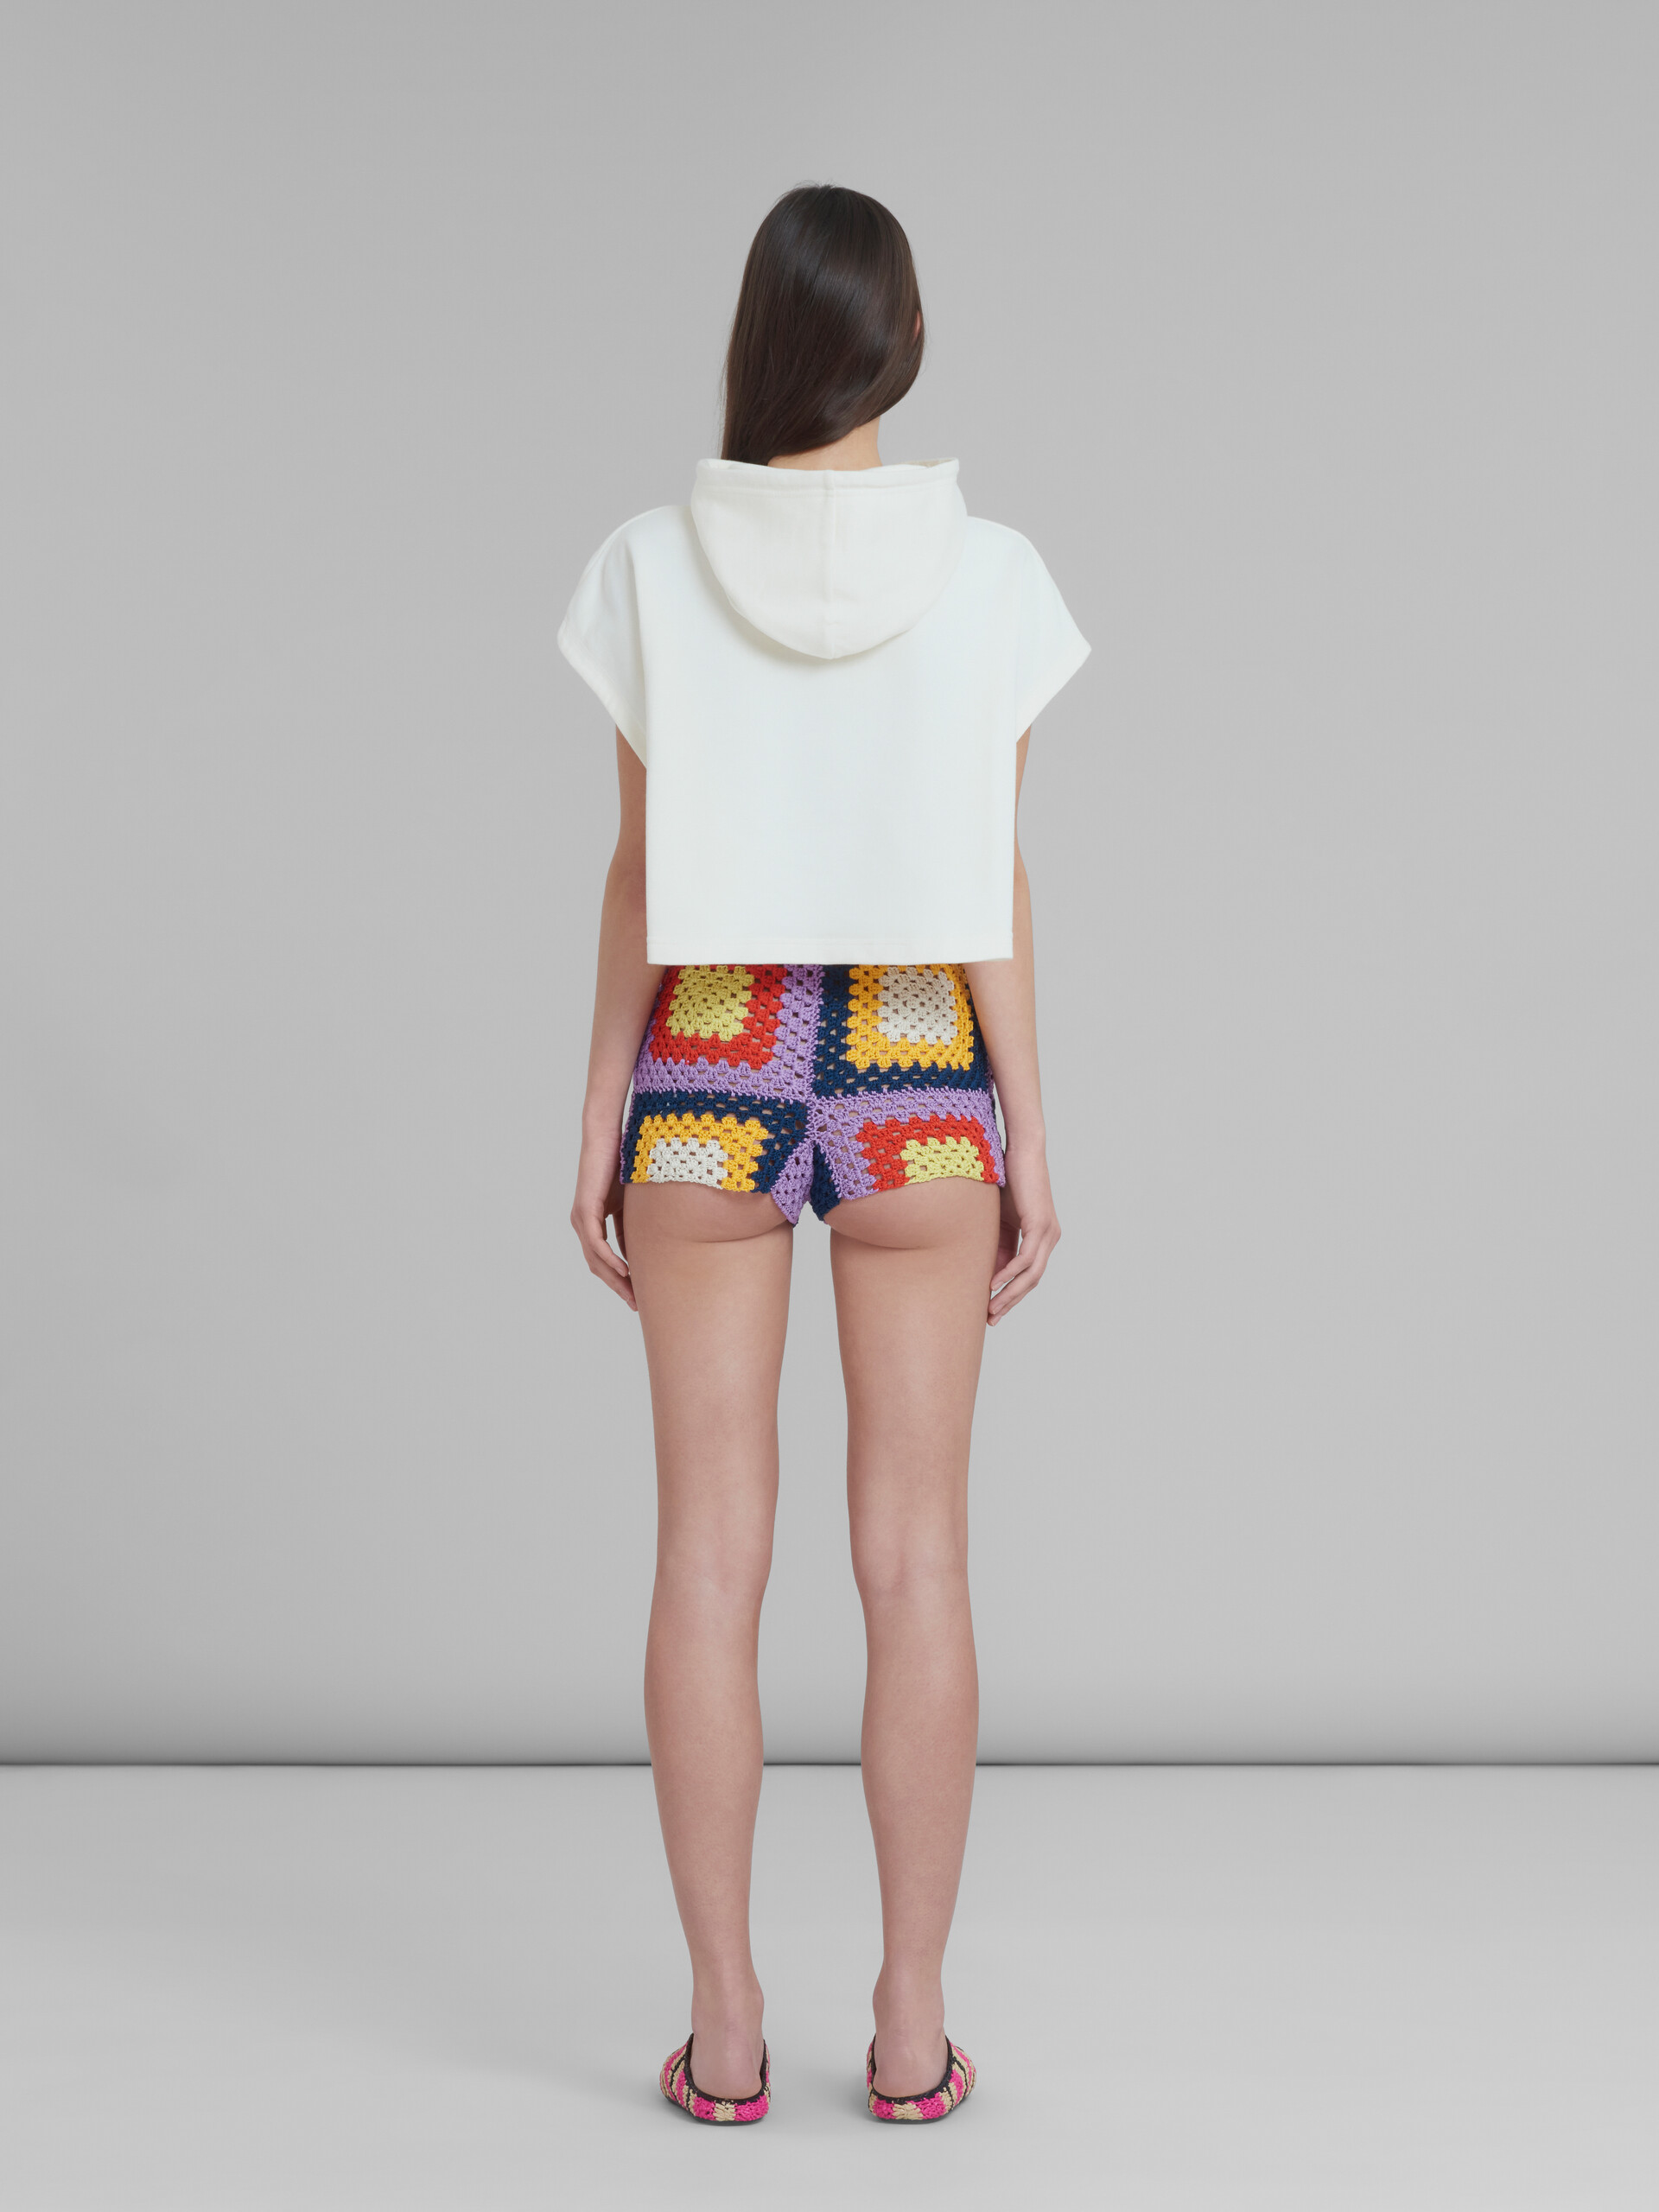 Marni x No Vacancy Inn - Multicolour cotton-knit shorts - Pants - Image 3